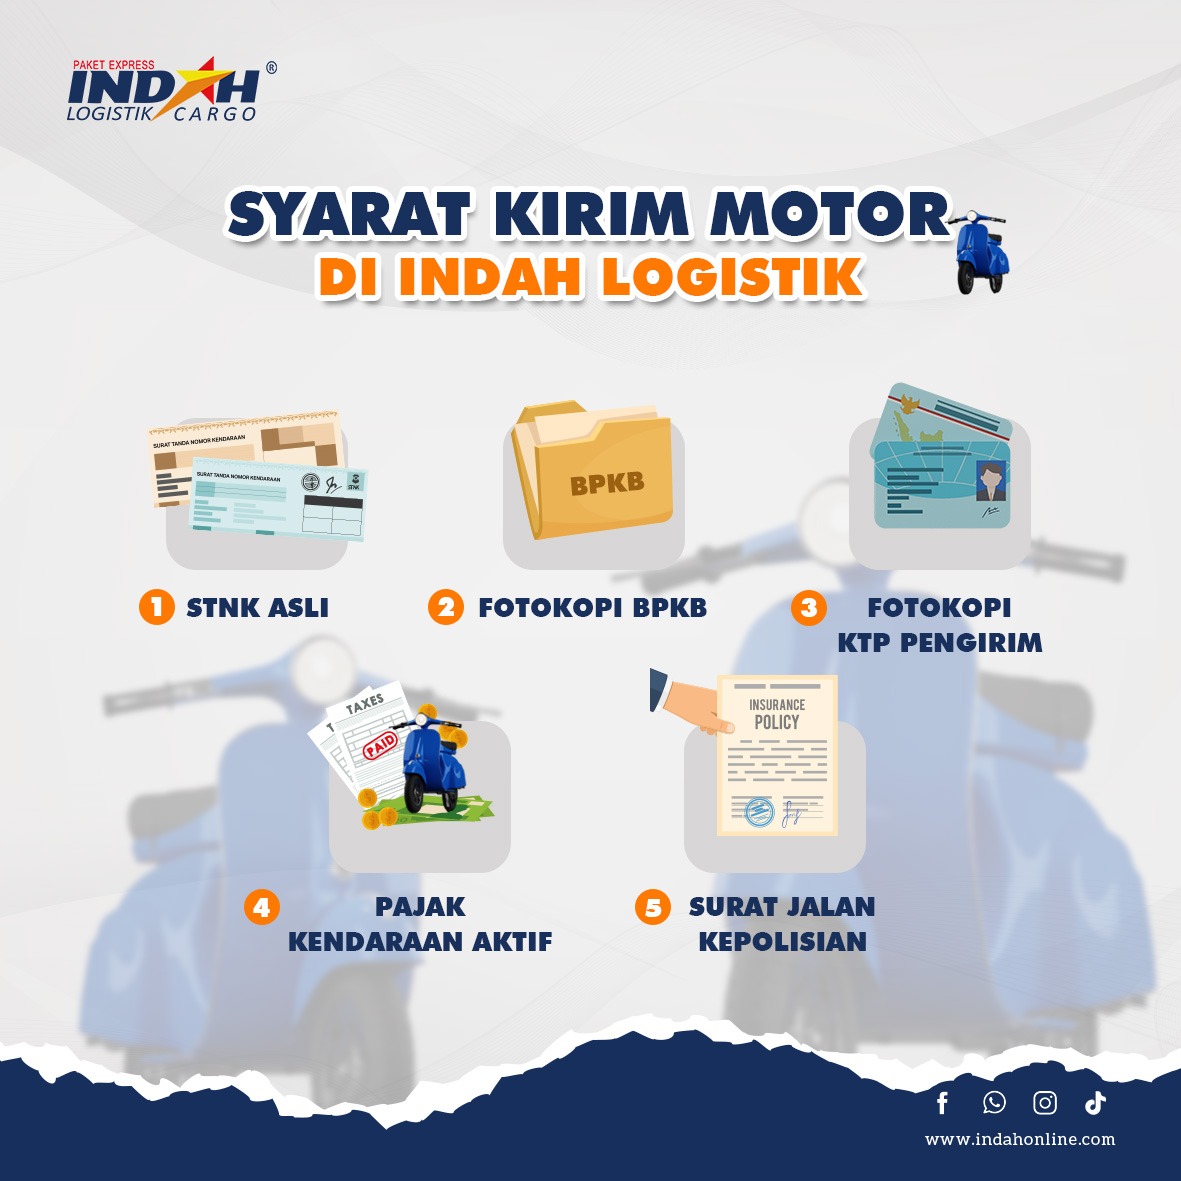 Conditions for Sending Indah Logistics Motorbikes